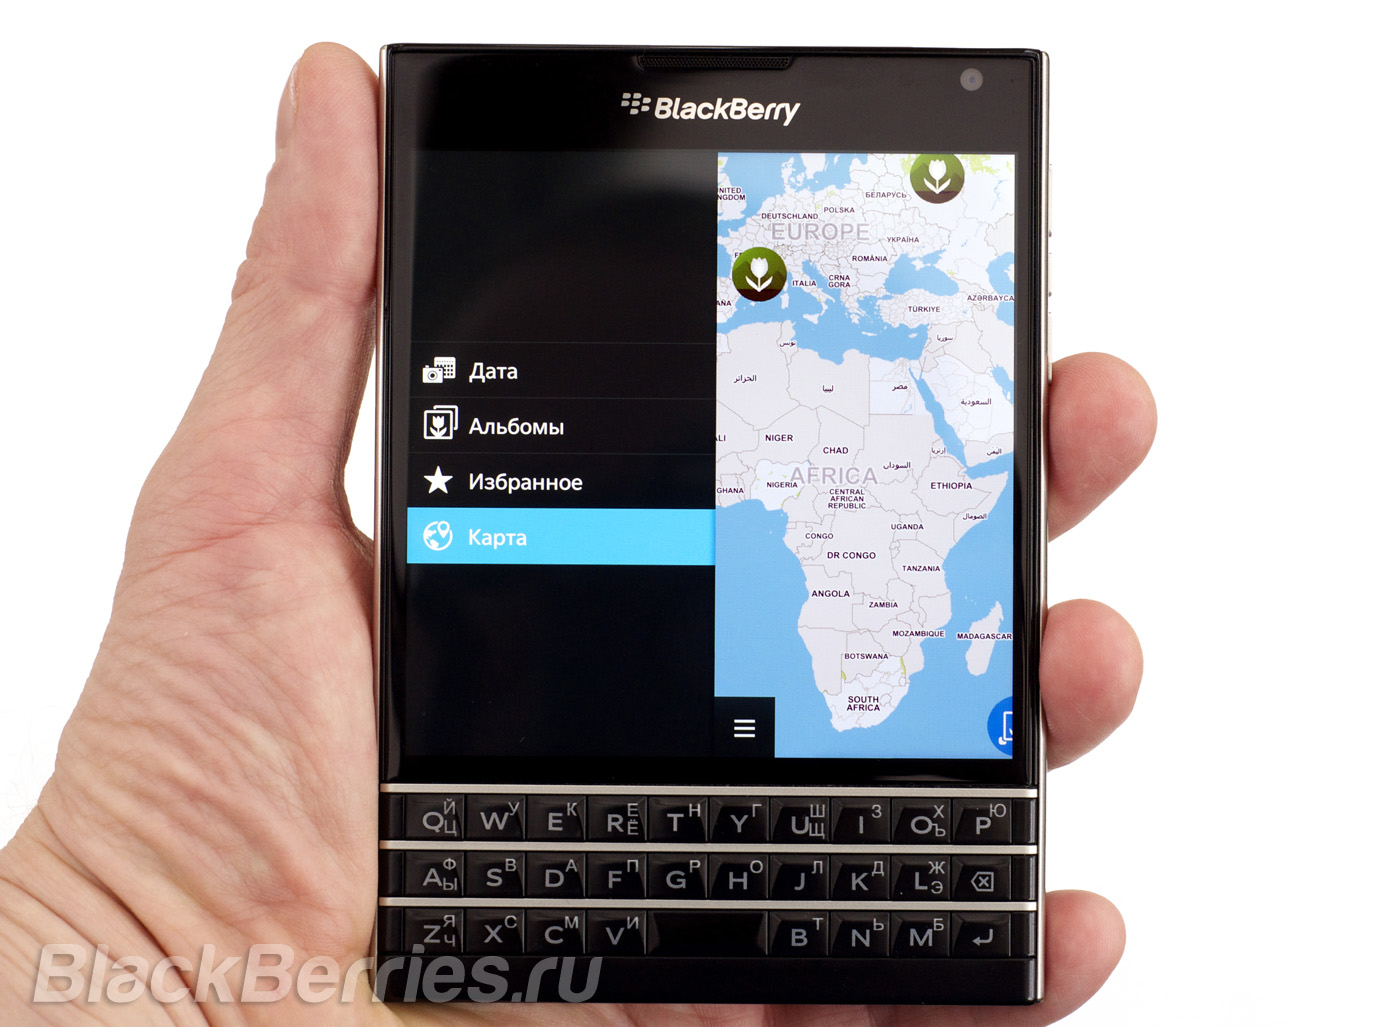 BlackBerry-Passport-Maps-images-1